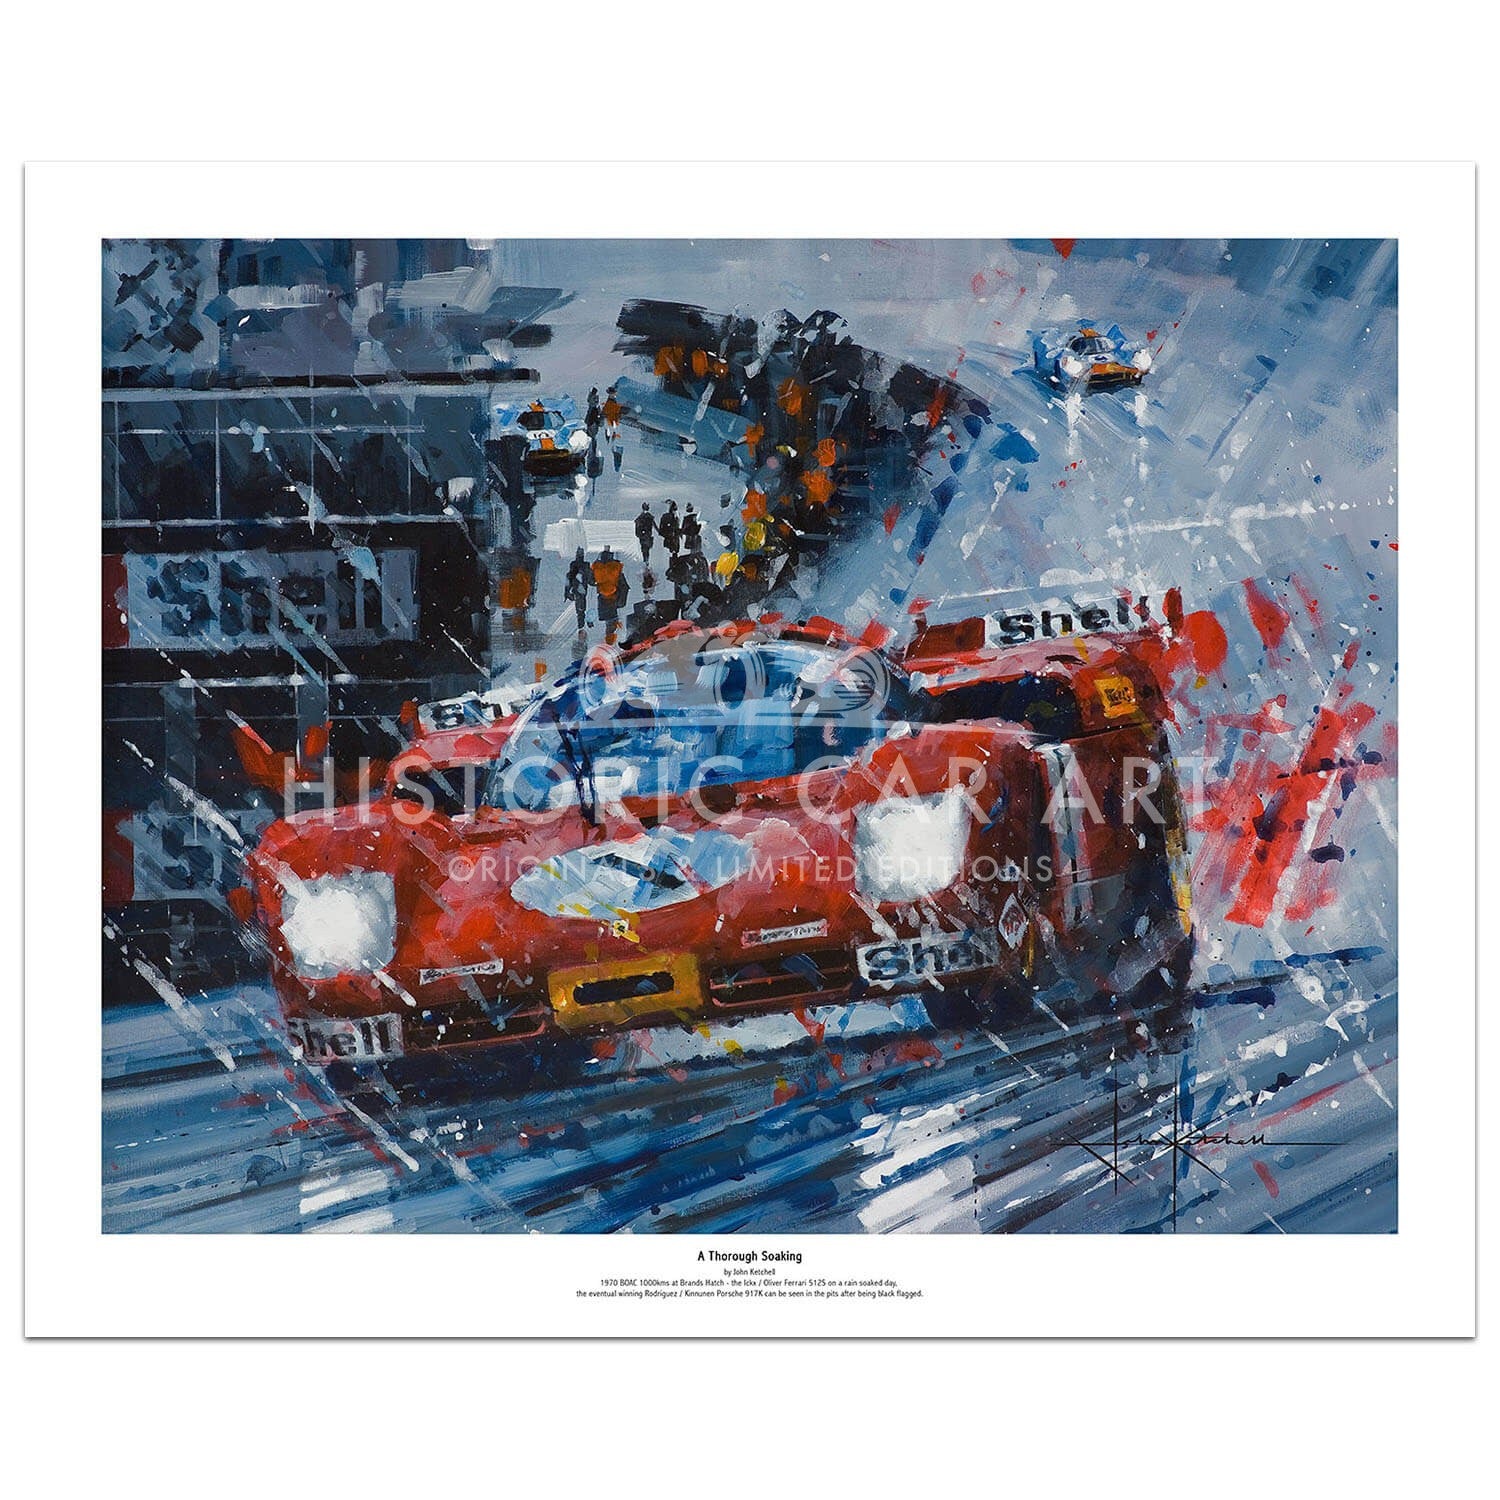 A Thorough Soaking | Ickx & Oliver | Ferrari | Print